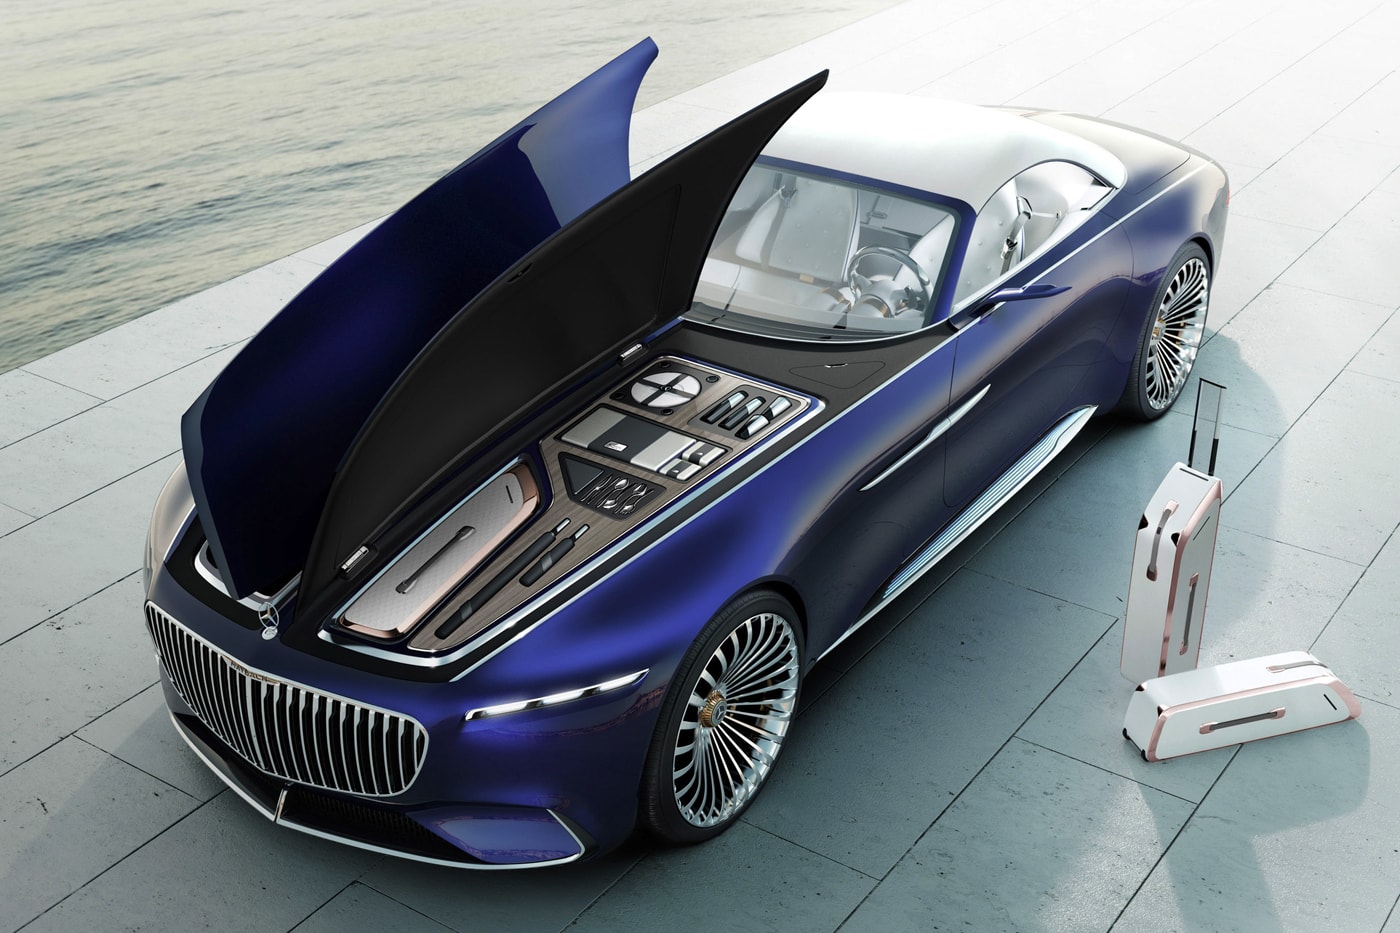 dc comics the flash Ezra Miller Michael Keaton bruce wayne Vision Mercedes-Maybach 6 Cabriolet news supercars concepts 